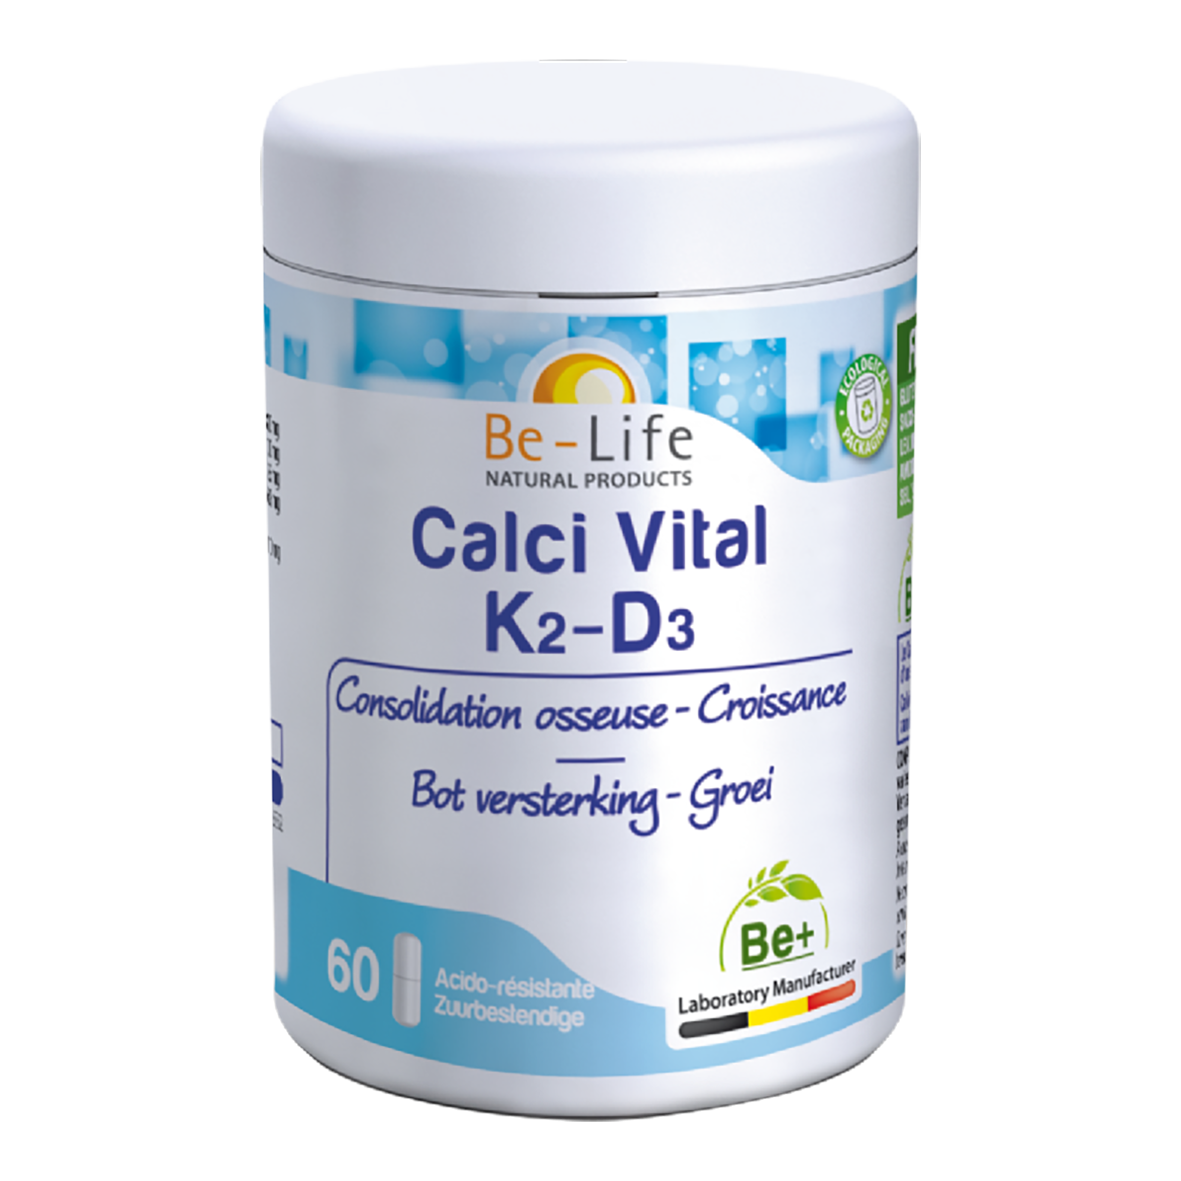 Be-Life - Calci Vital K2-D3 60 gélules